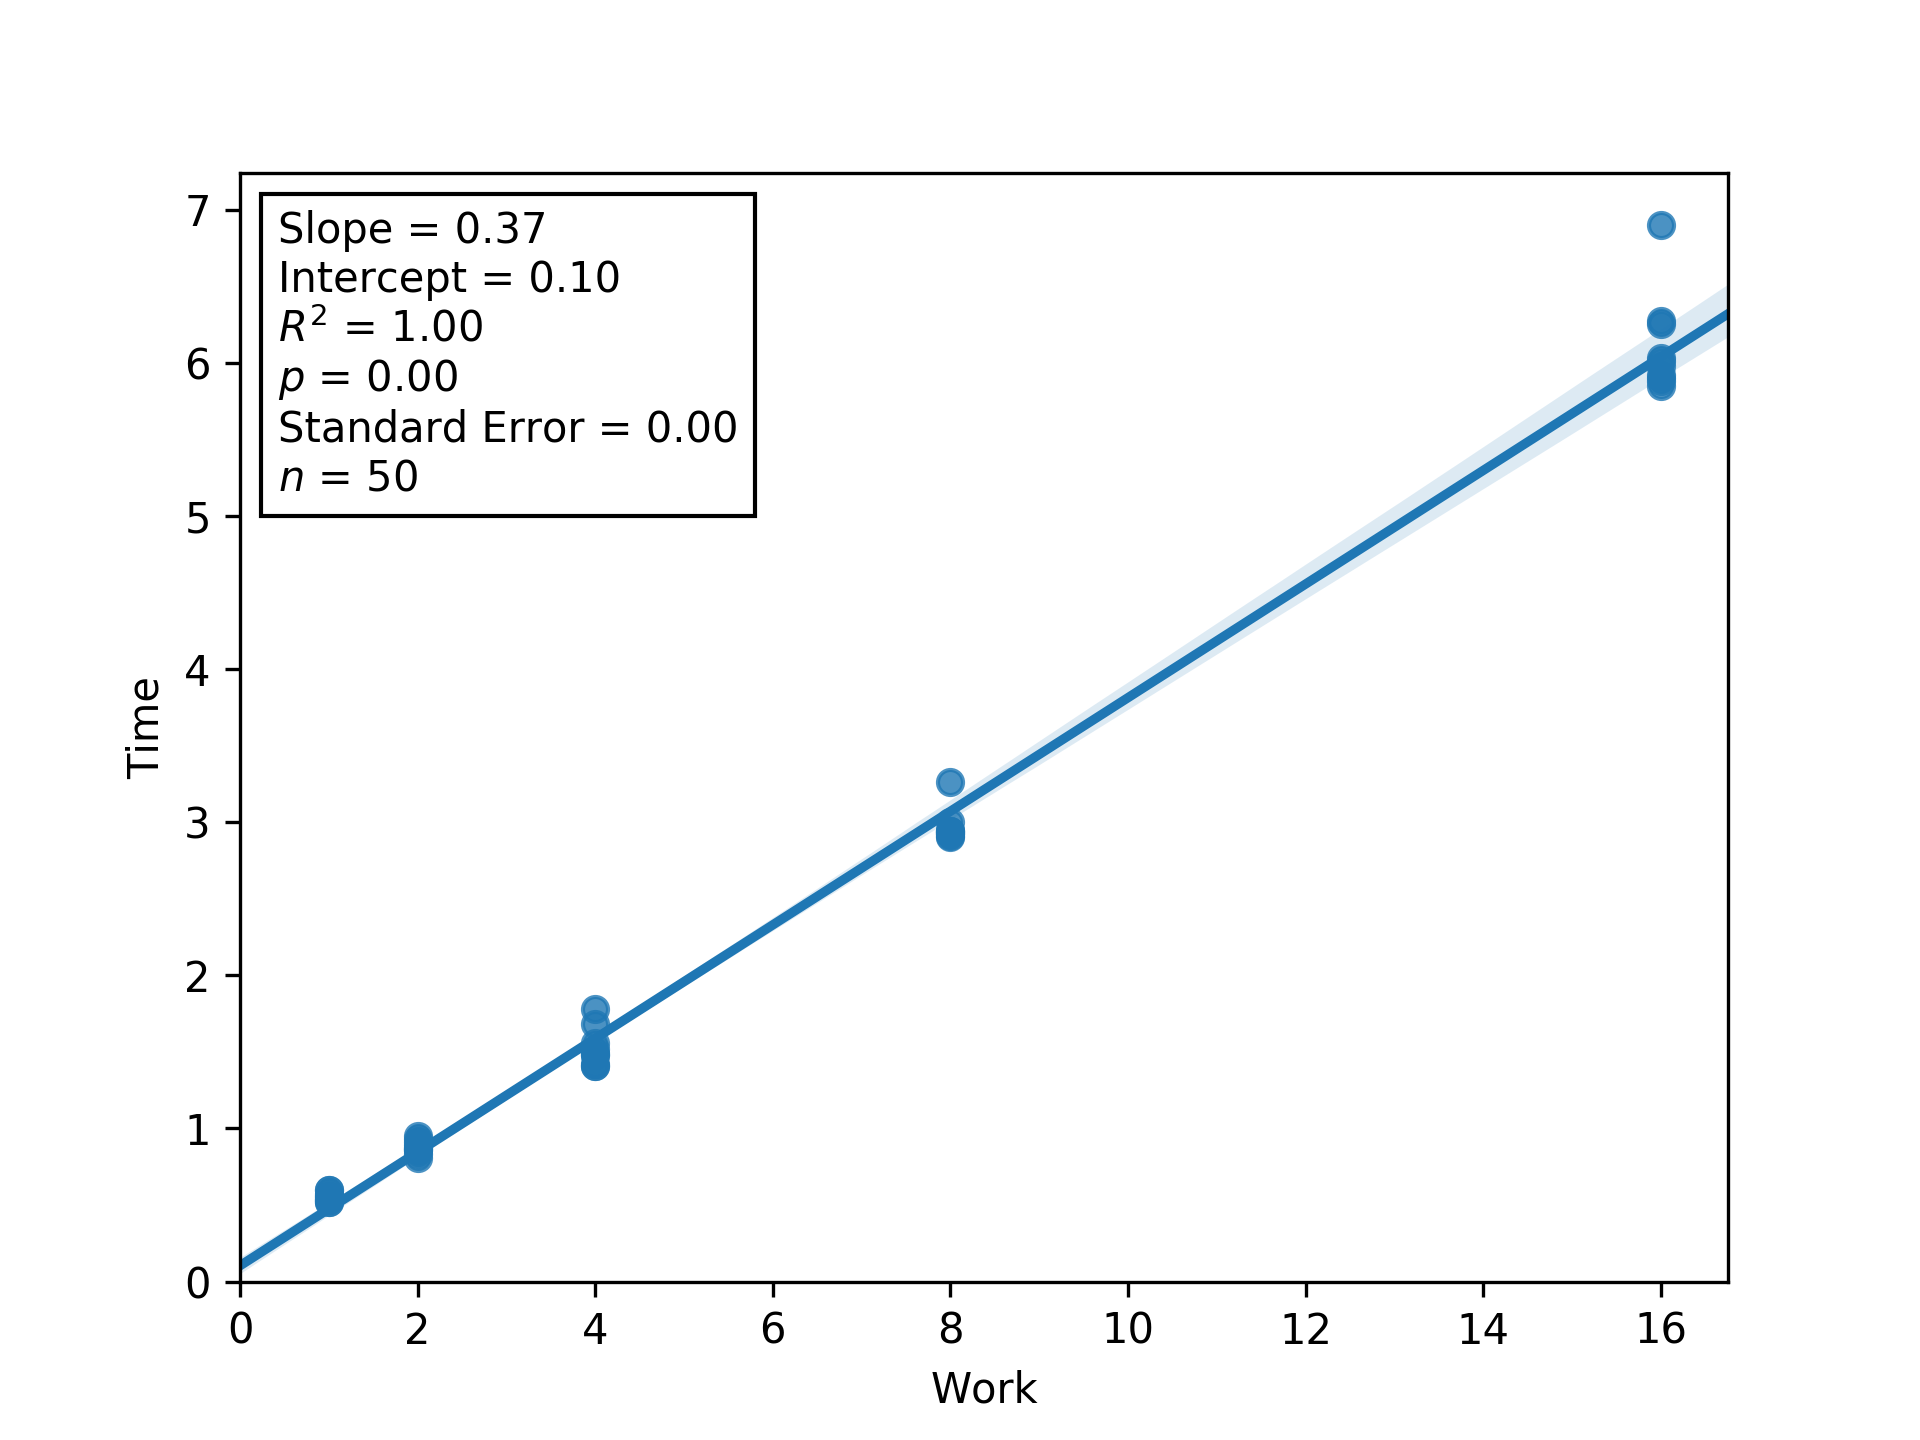 regression plot